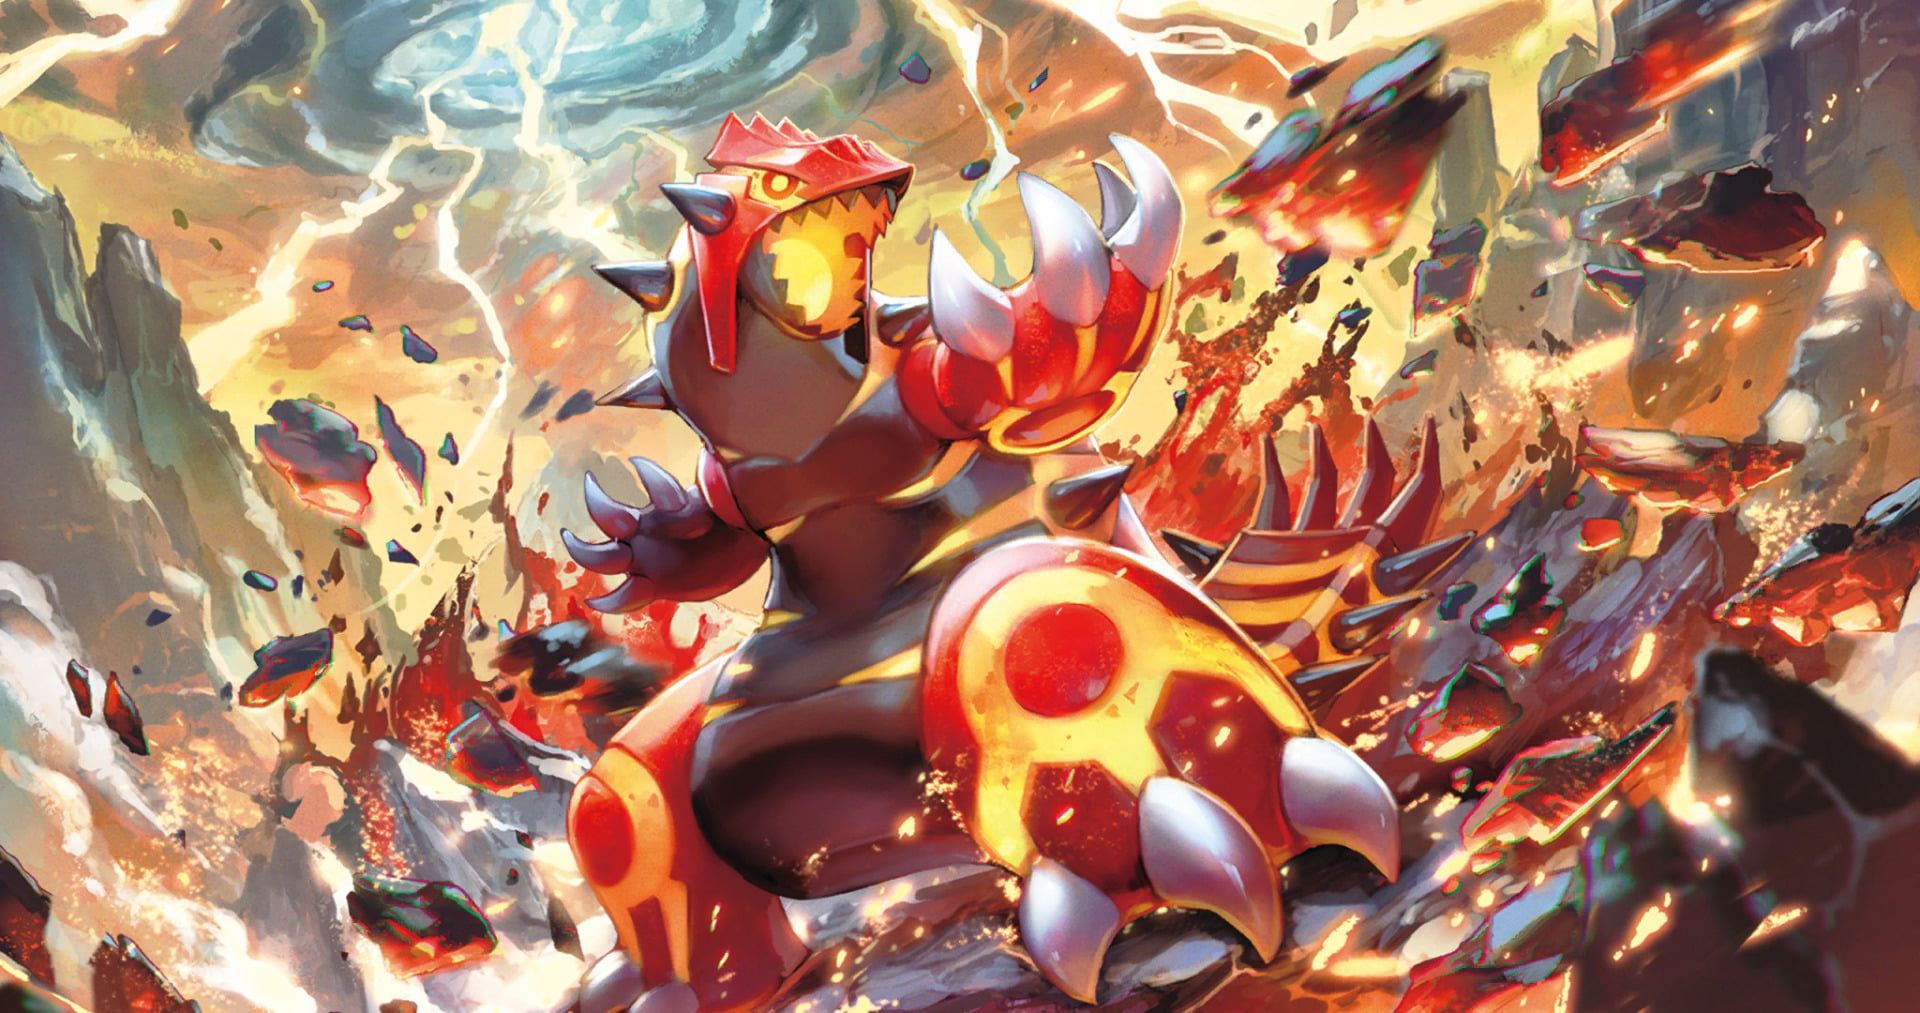 Fire Type Pokemon Digital Wallpaper, Pokémon